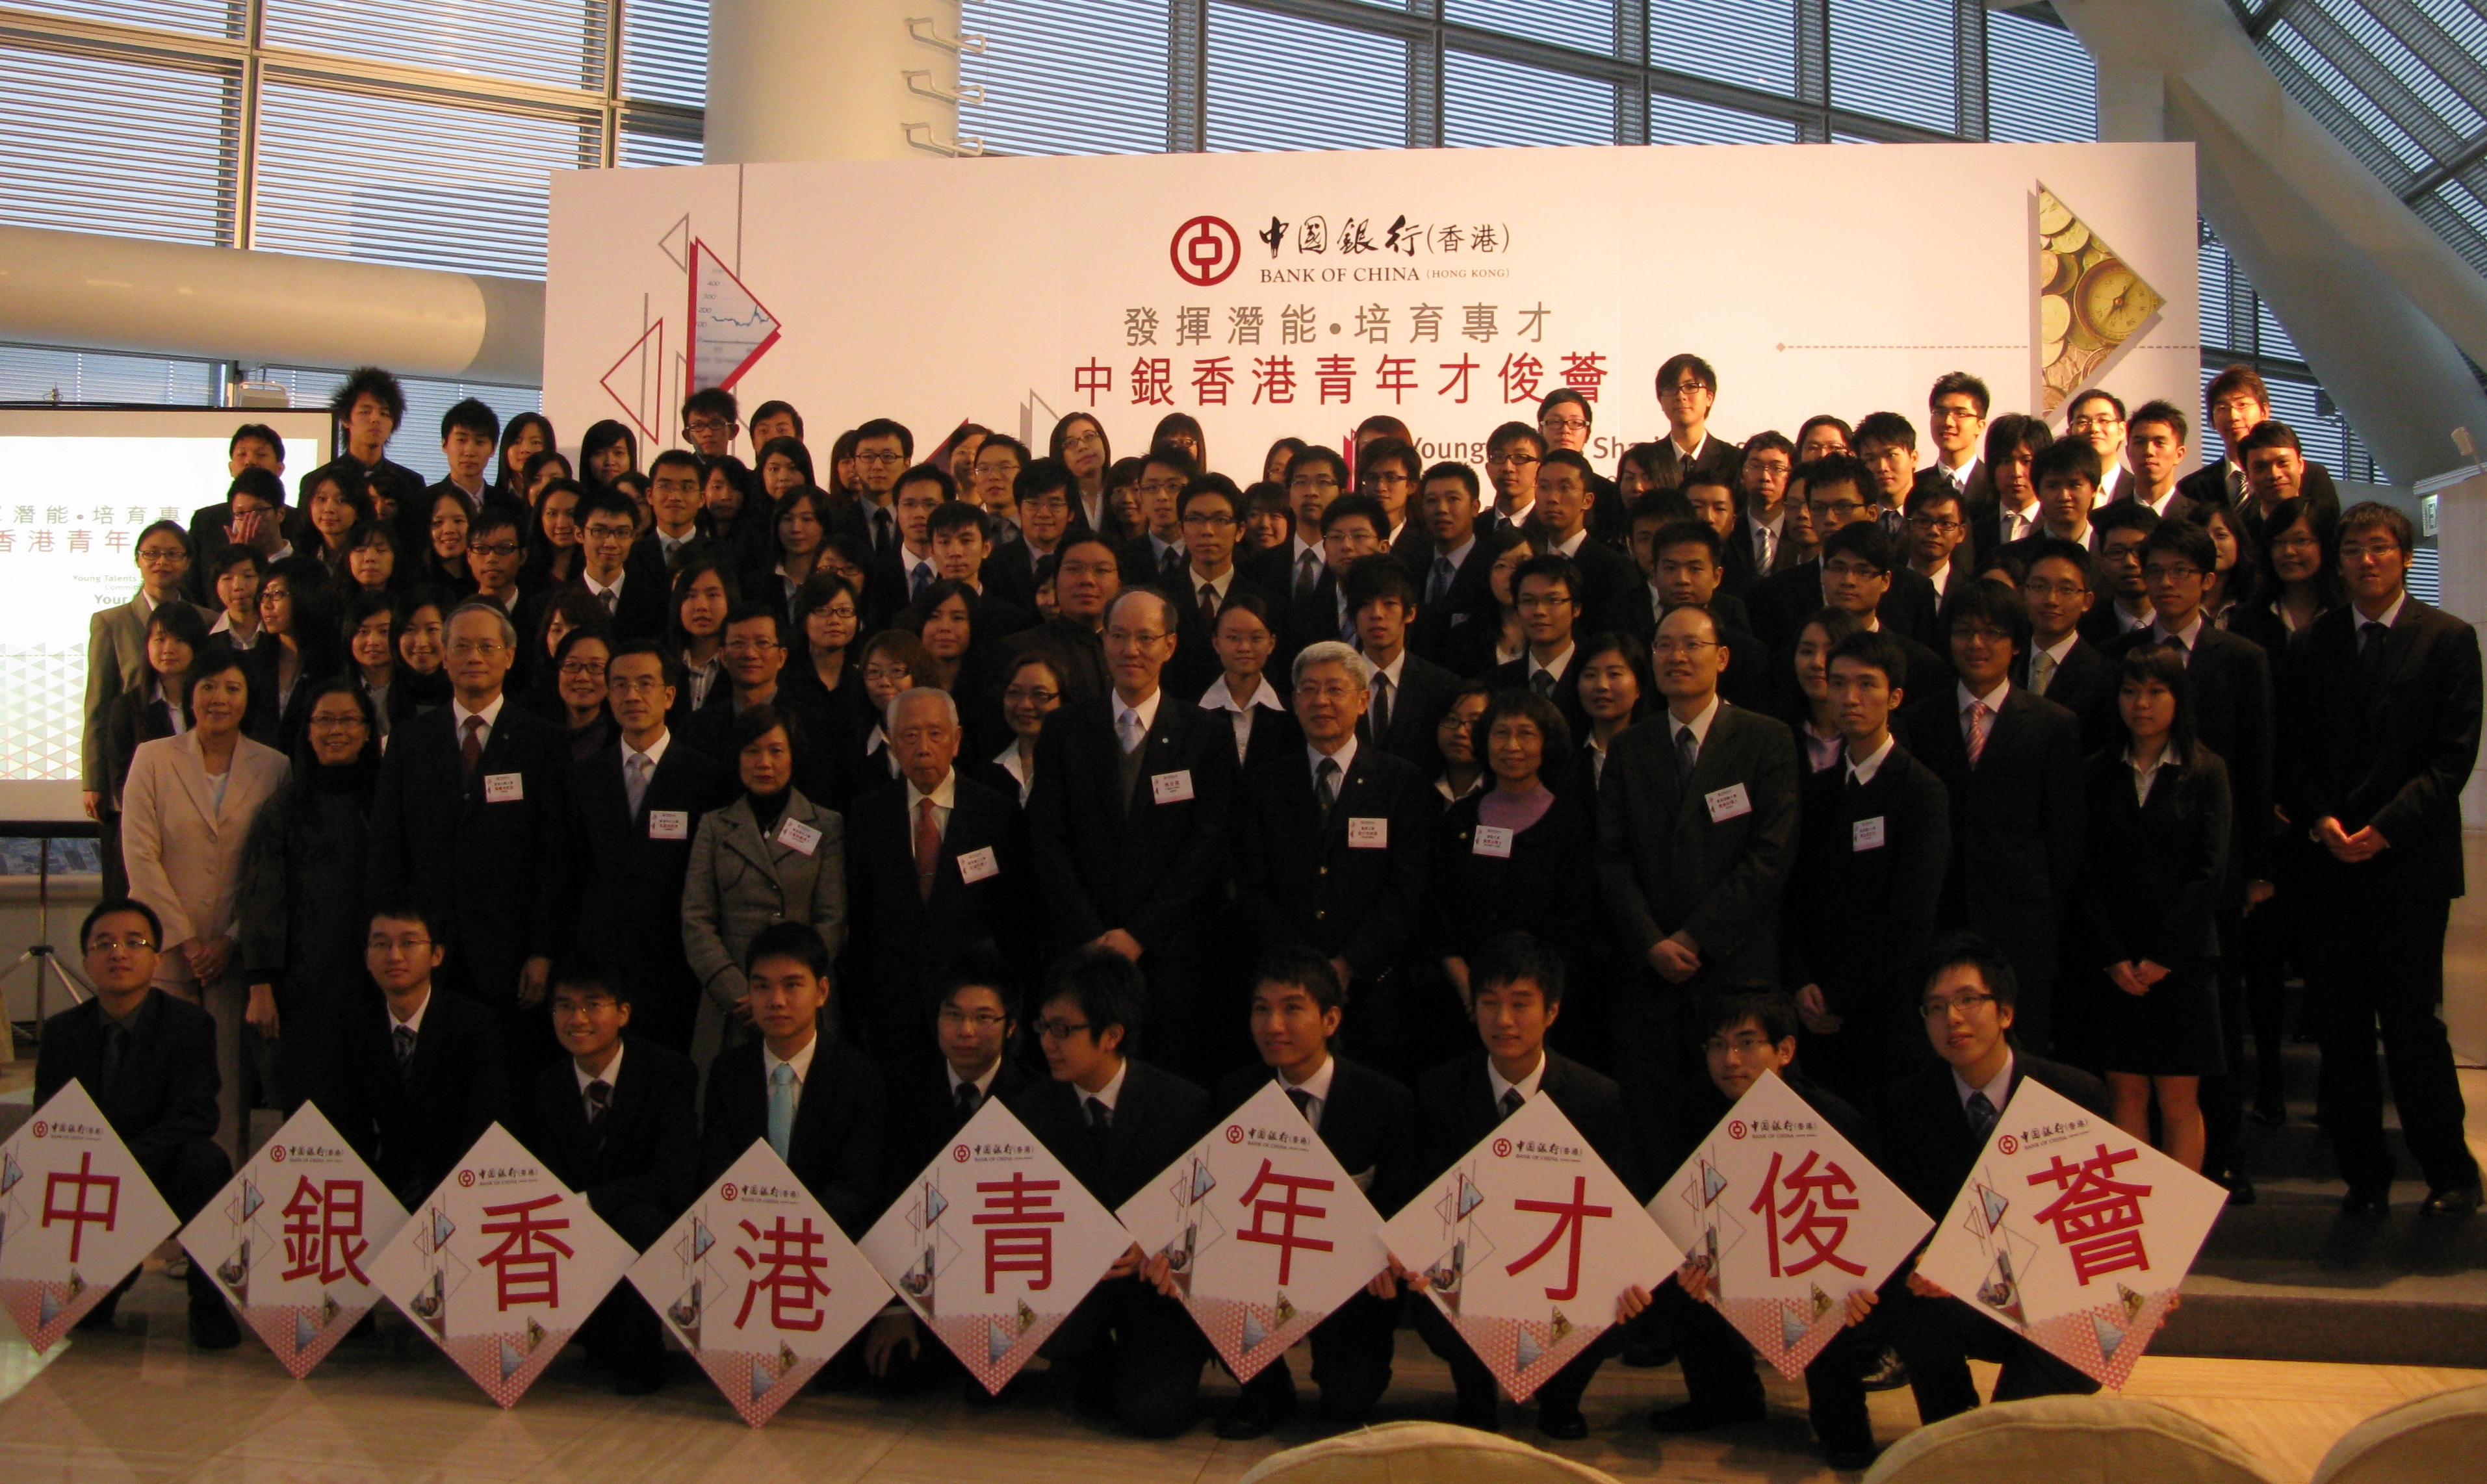 The image file about Bank of China (Hong Kong) Scholarships<br />中銀香港獎學金